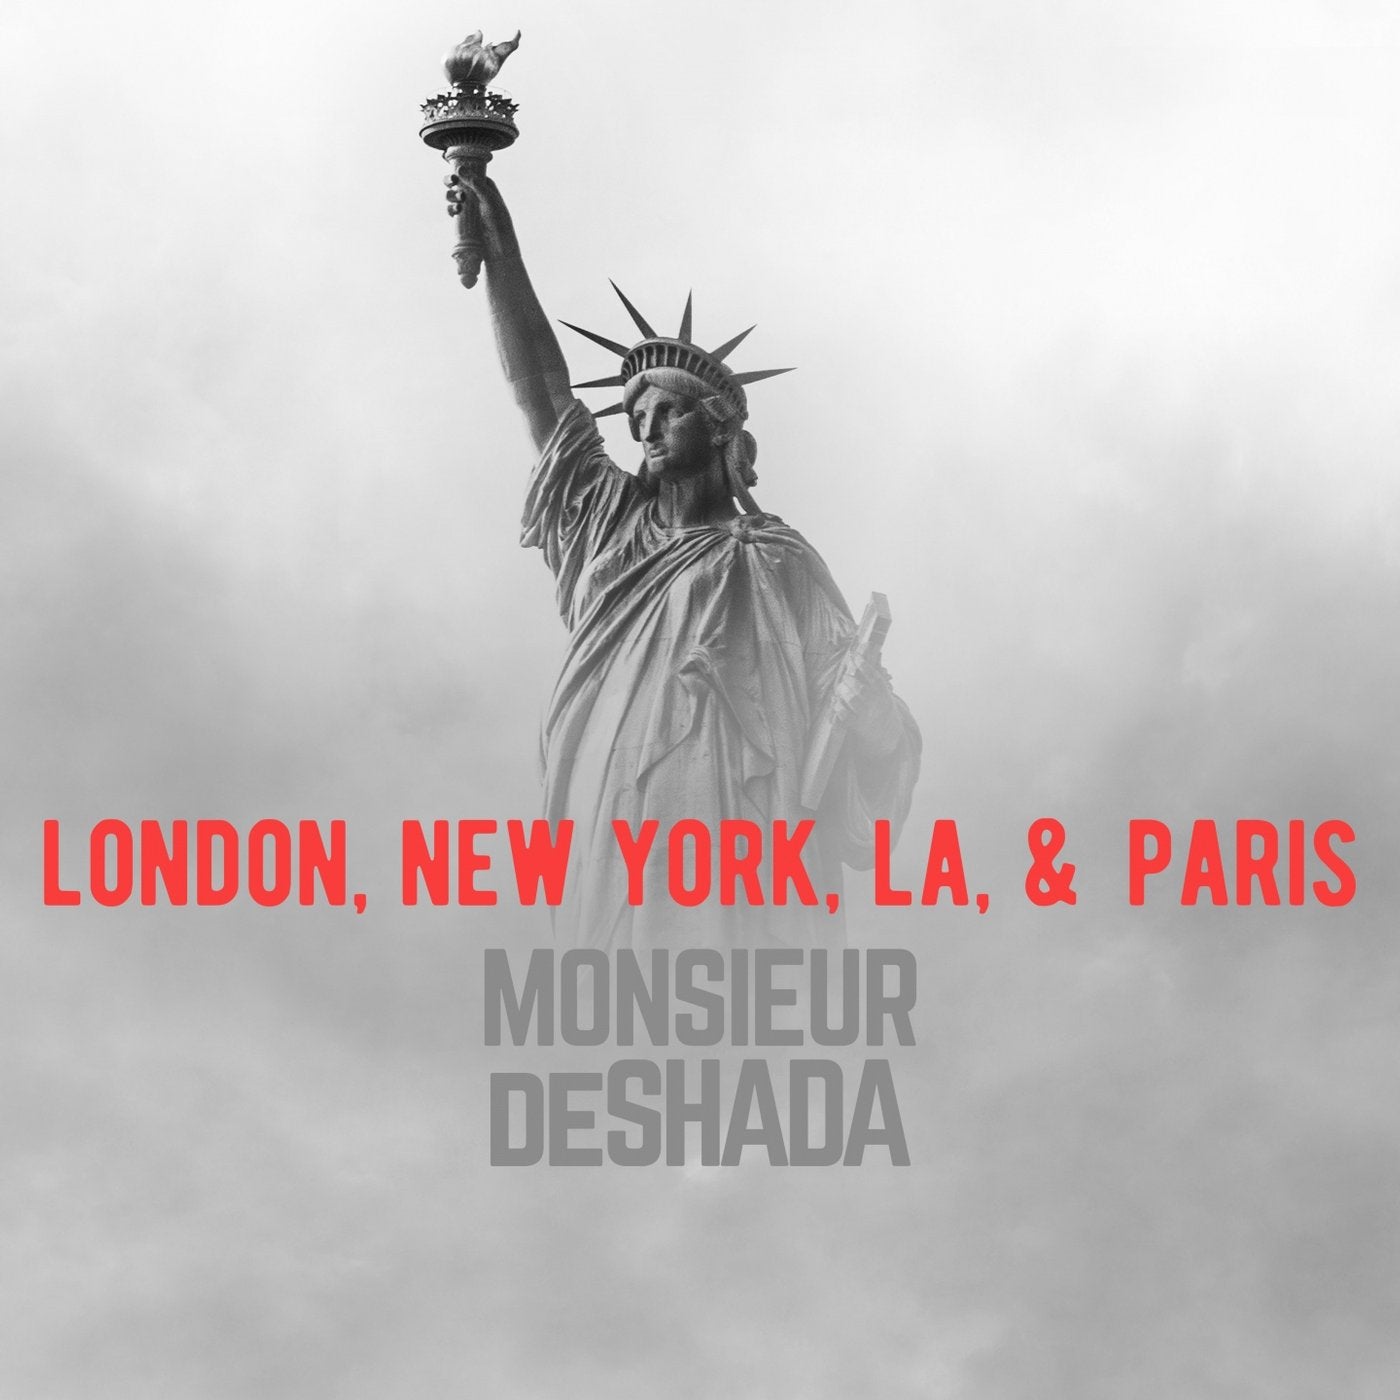 London, New York, LA & Paris